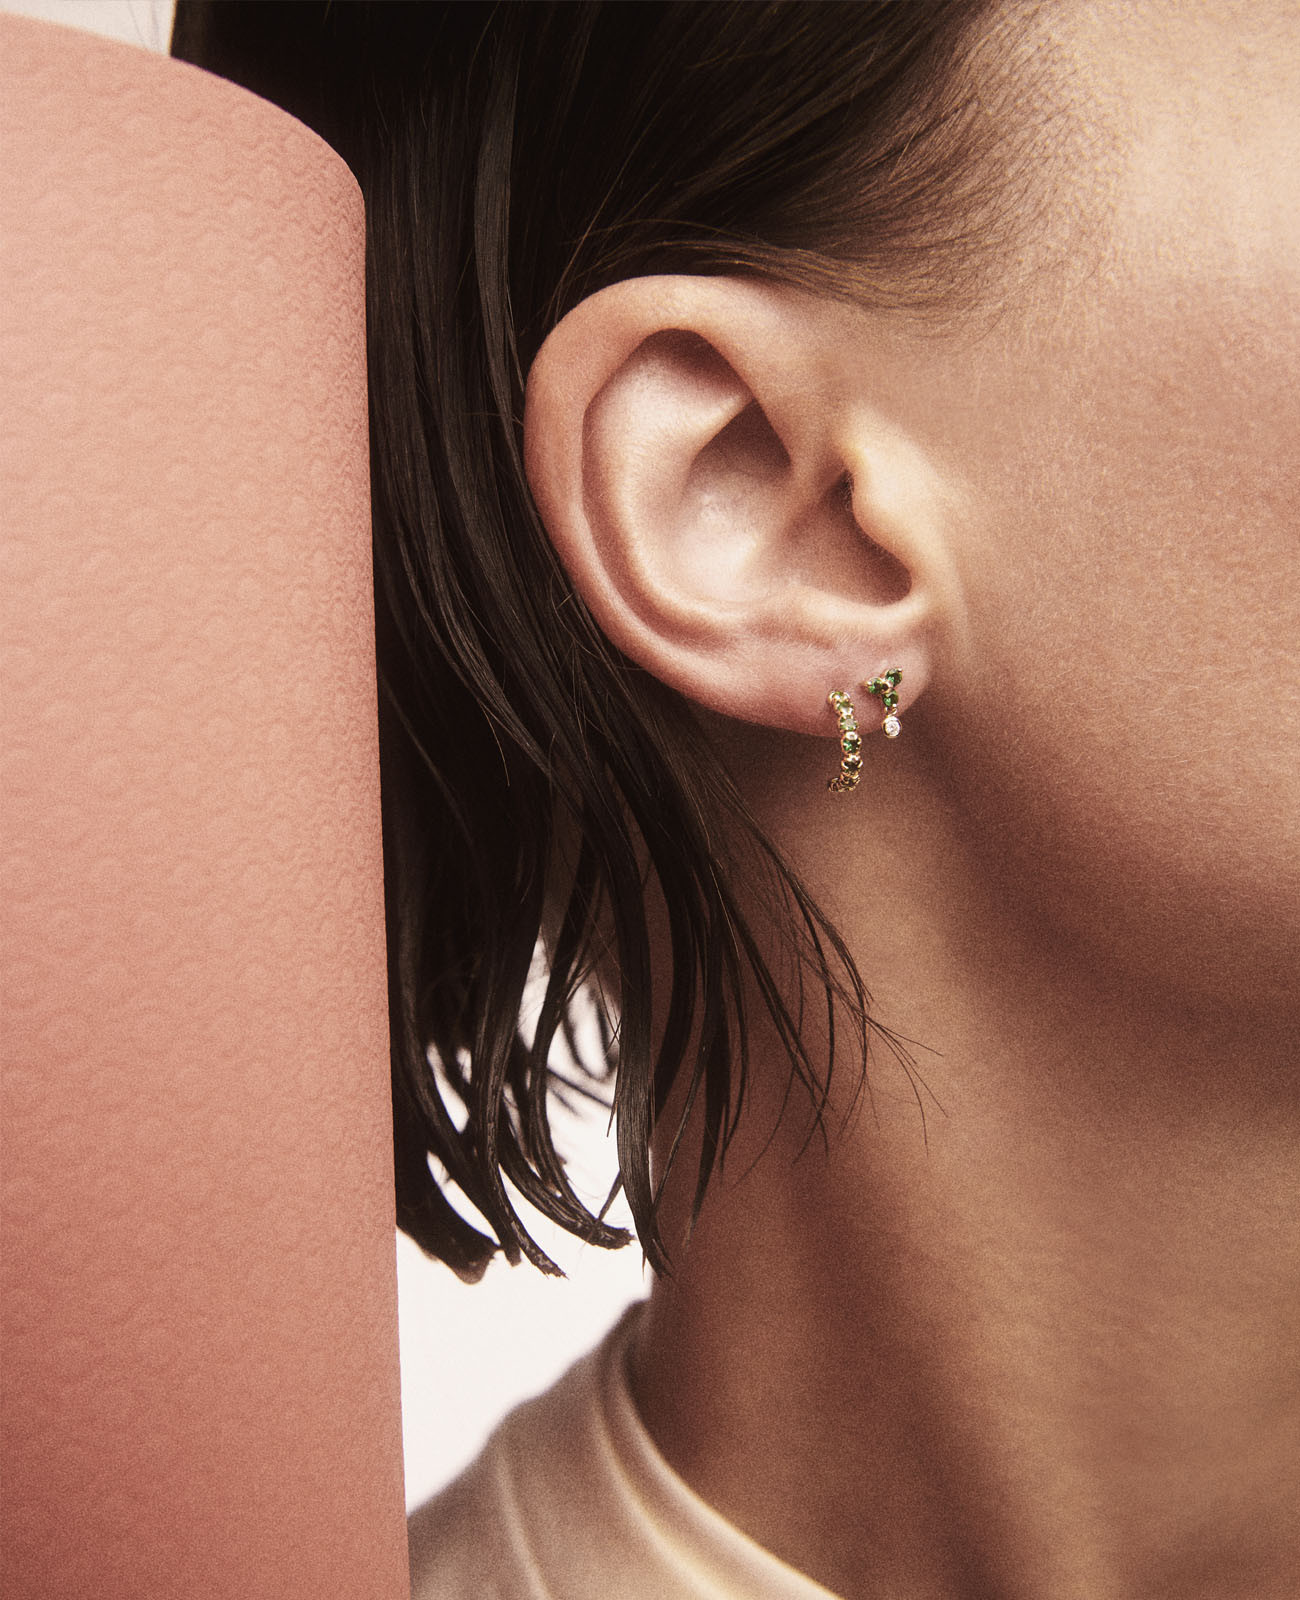 MIRA N°1 earring pascale monvoisin jewelry paris